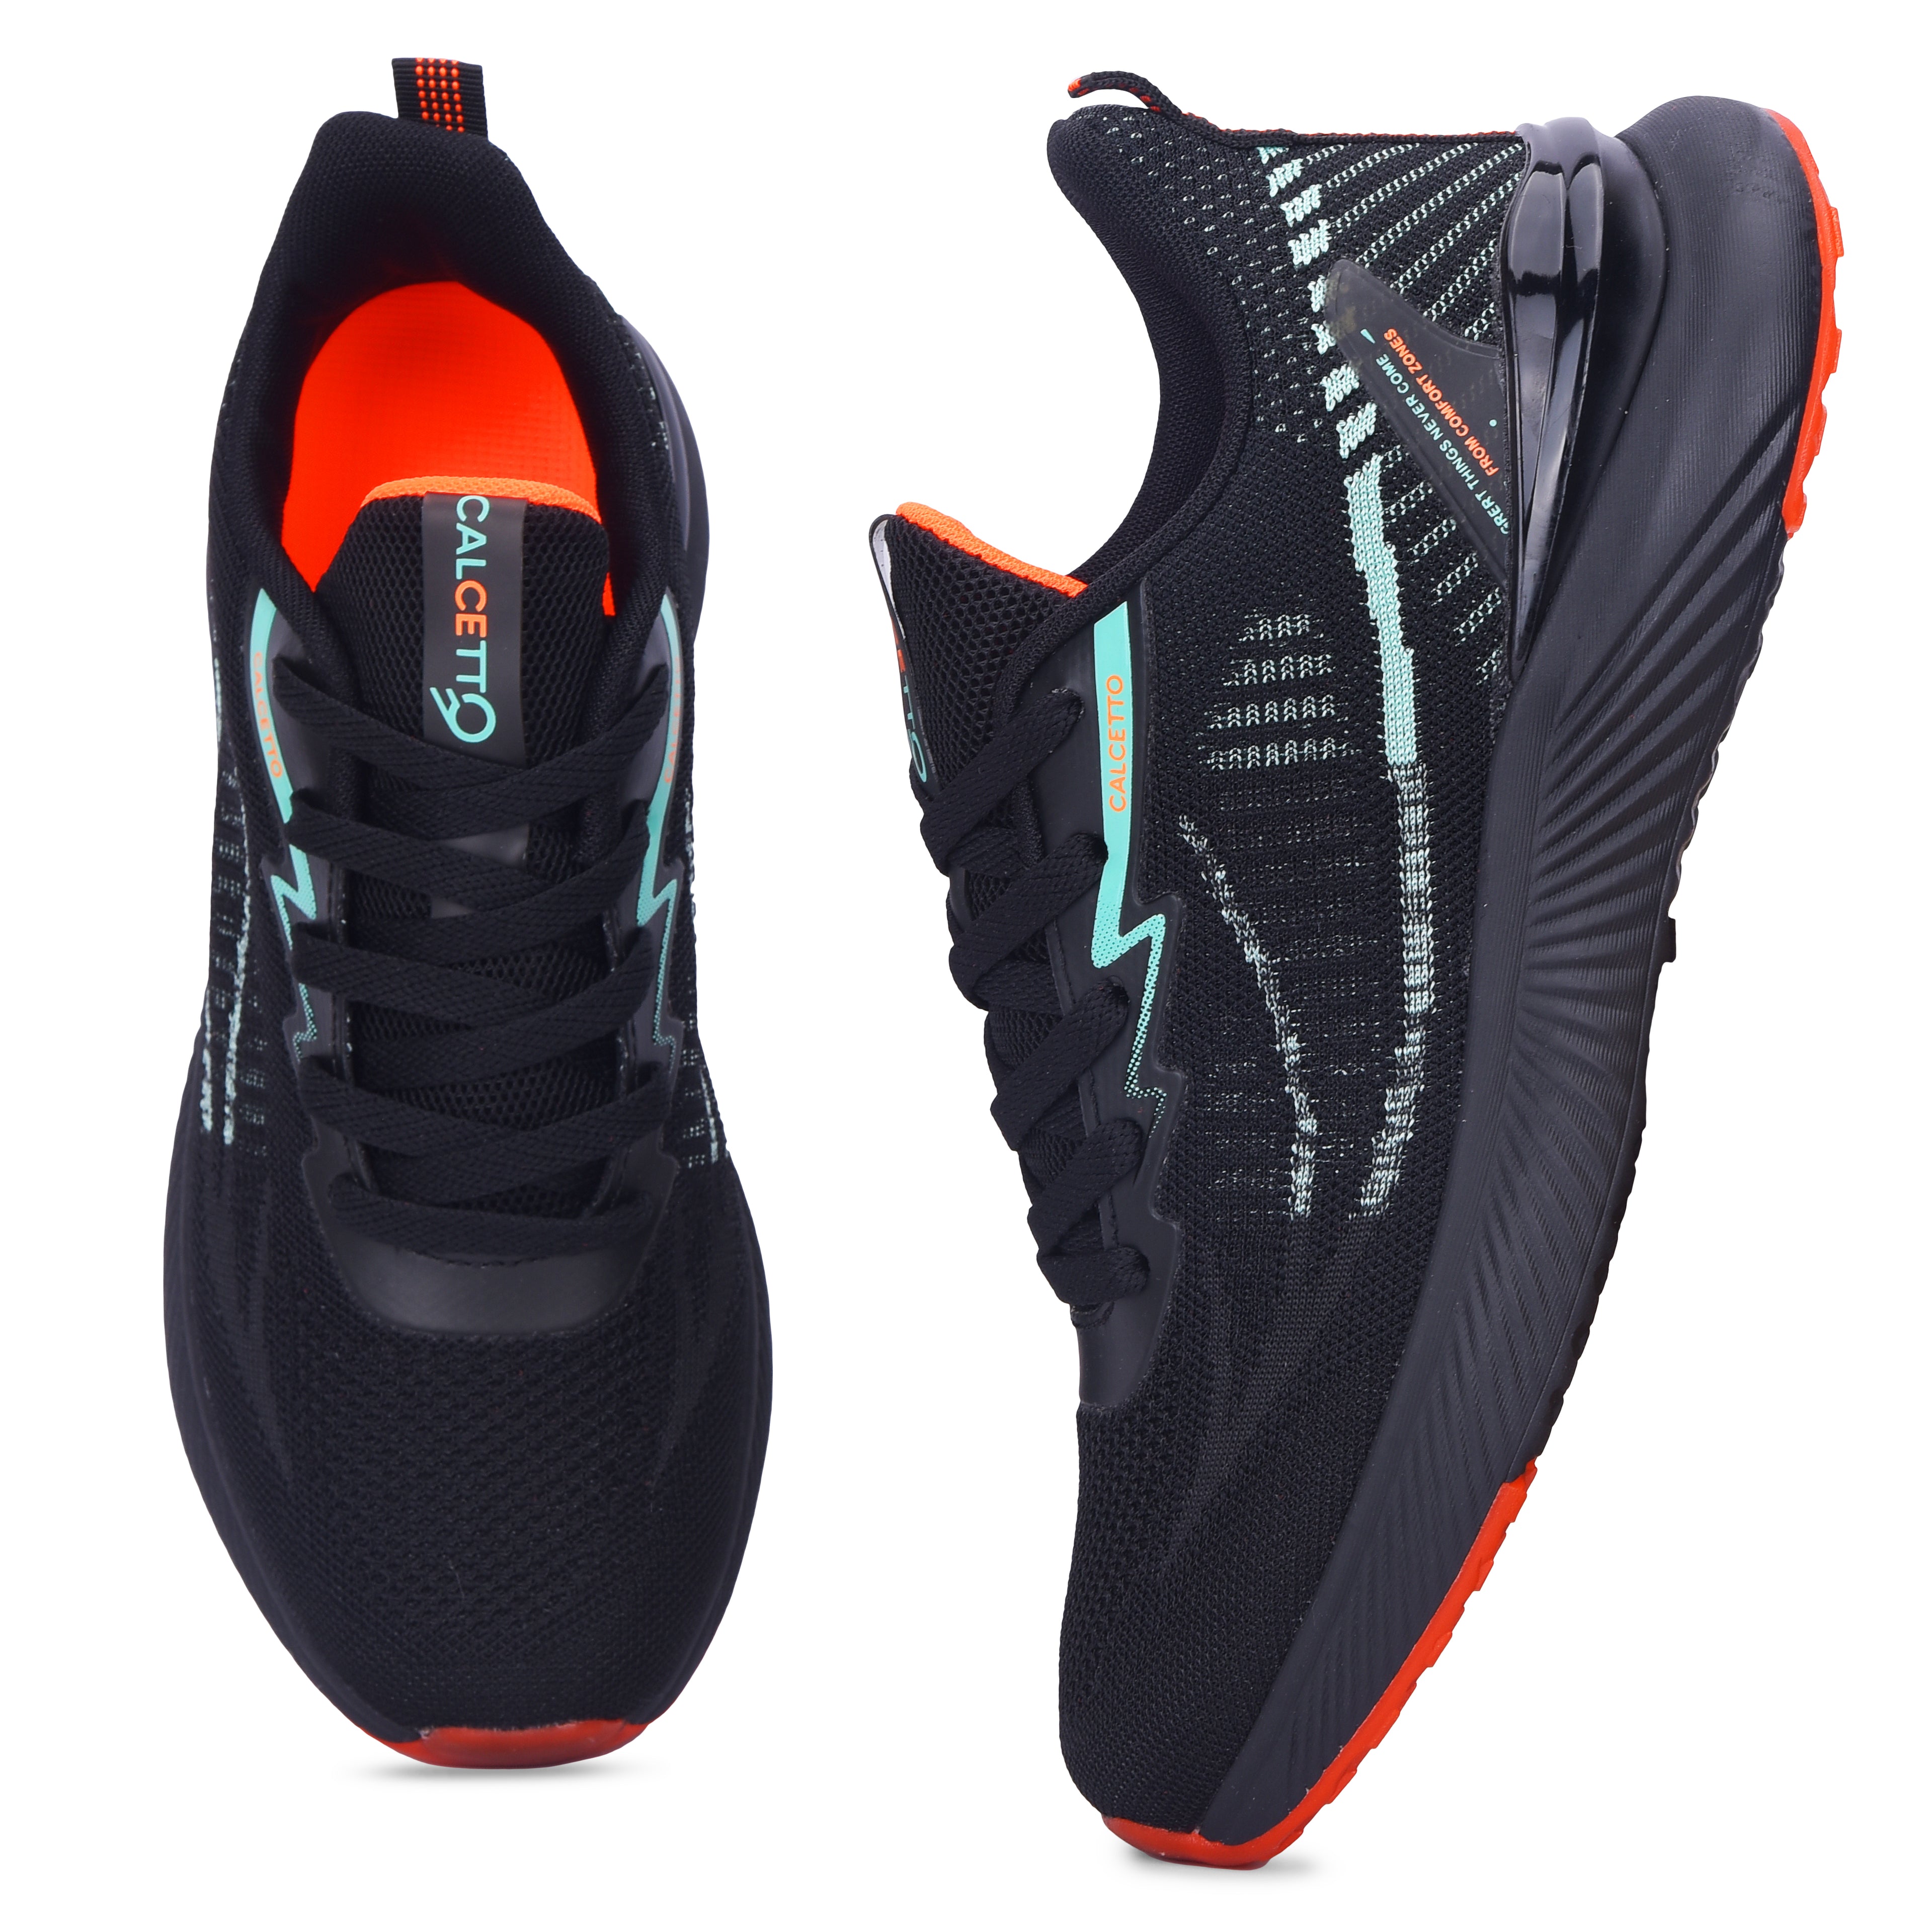 Calcetto CLT-0987 Black Green Running Shoe For Men